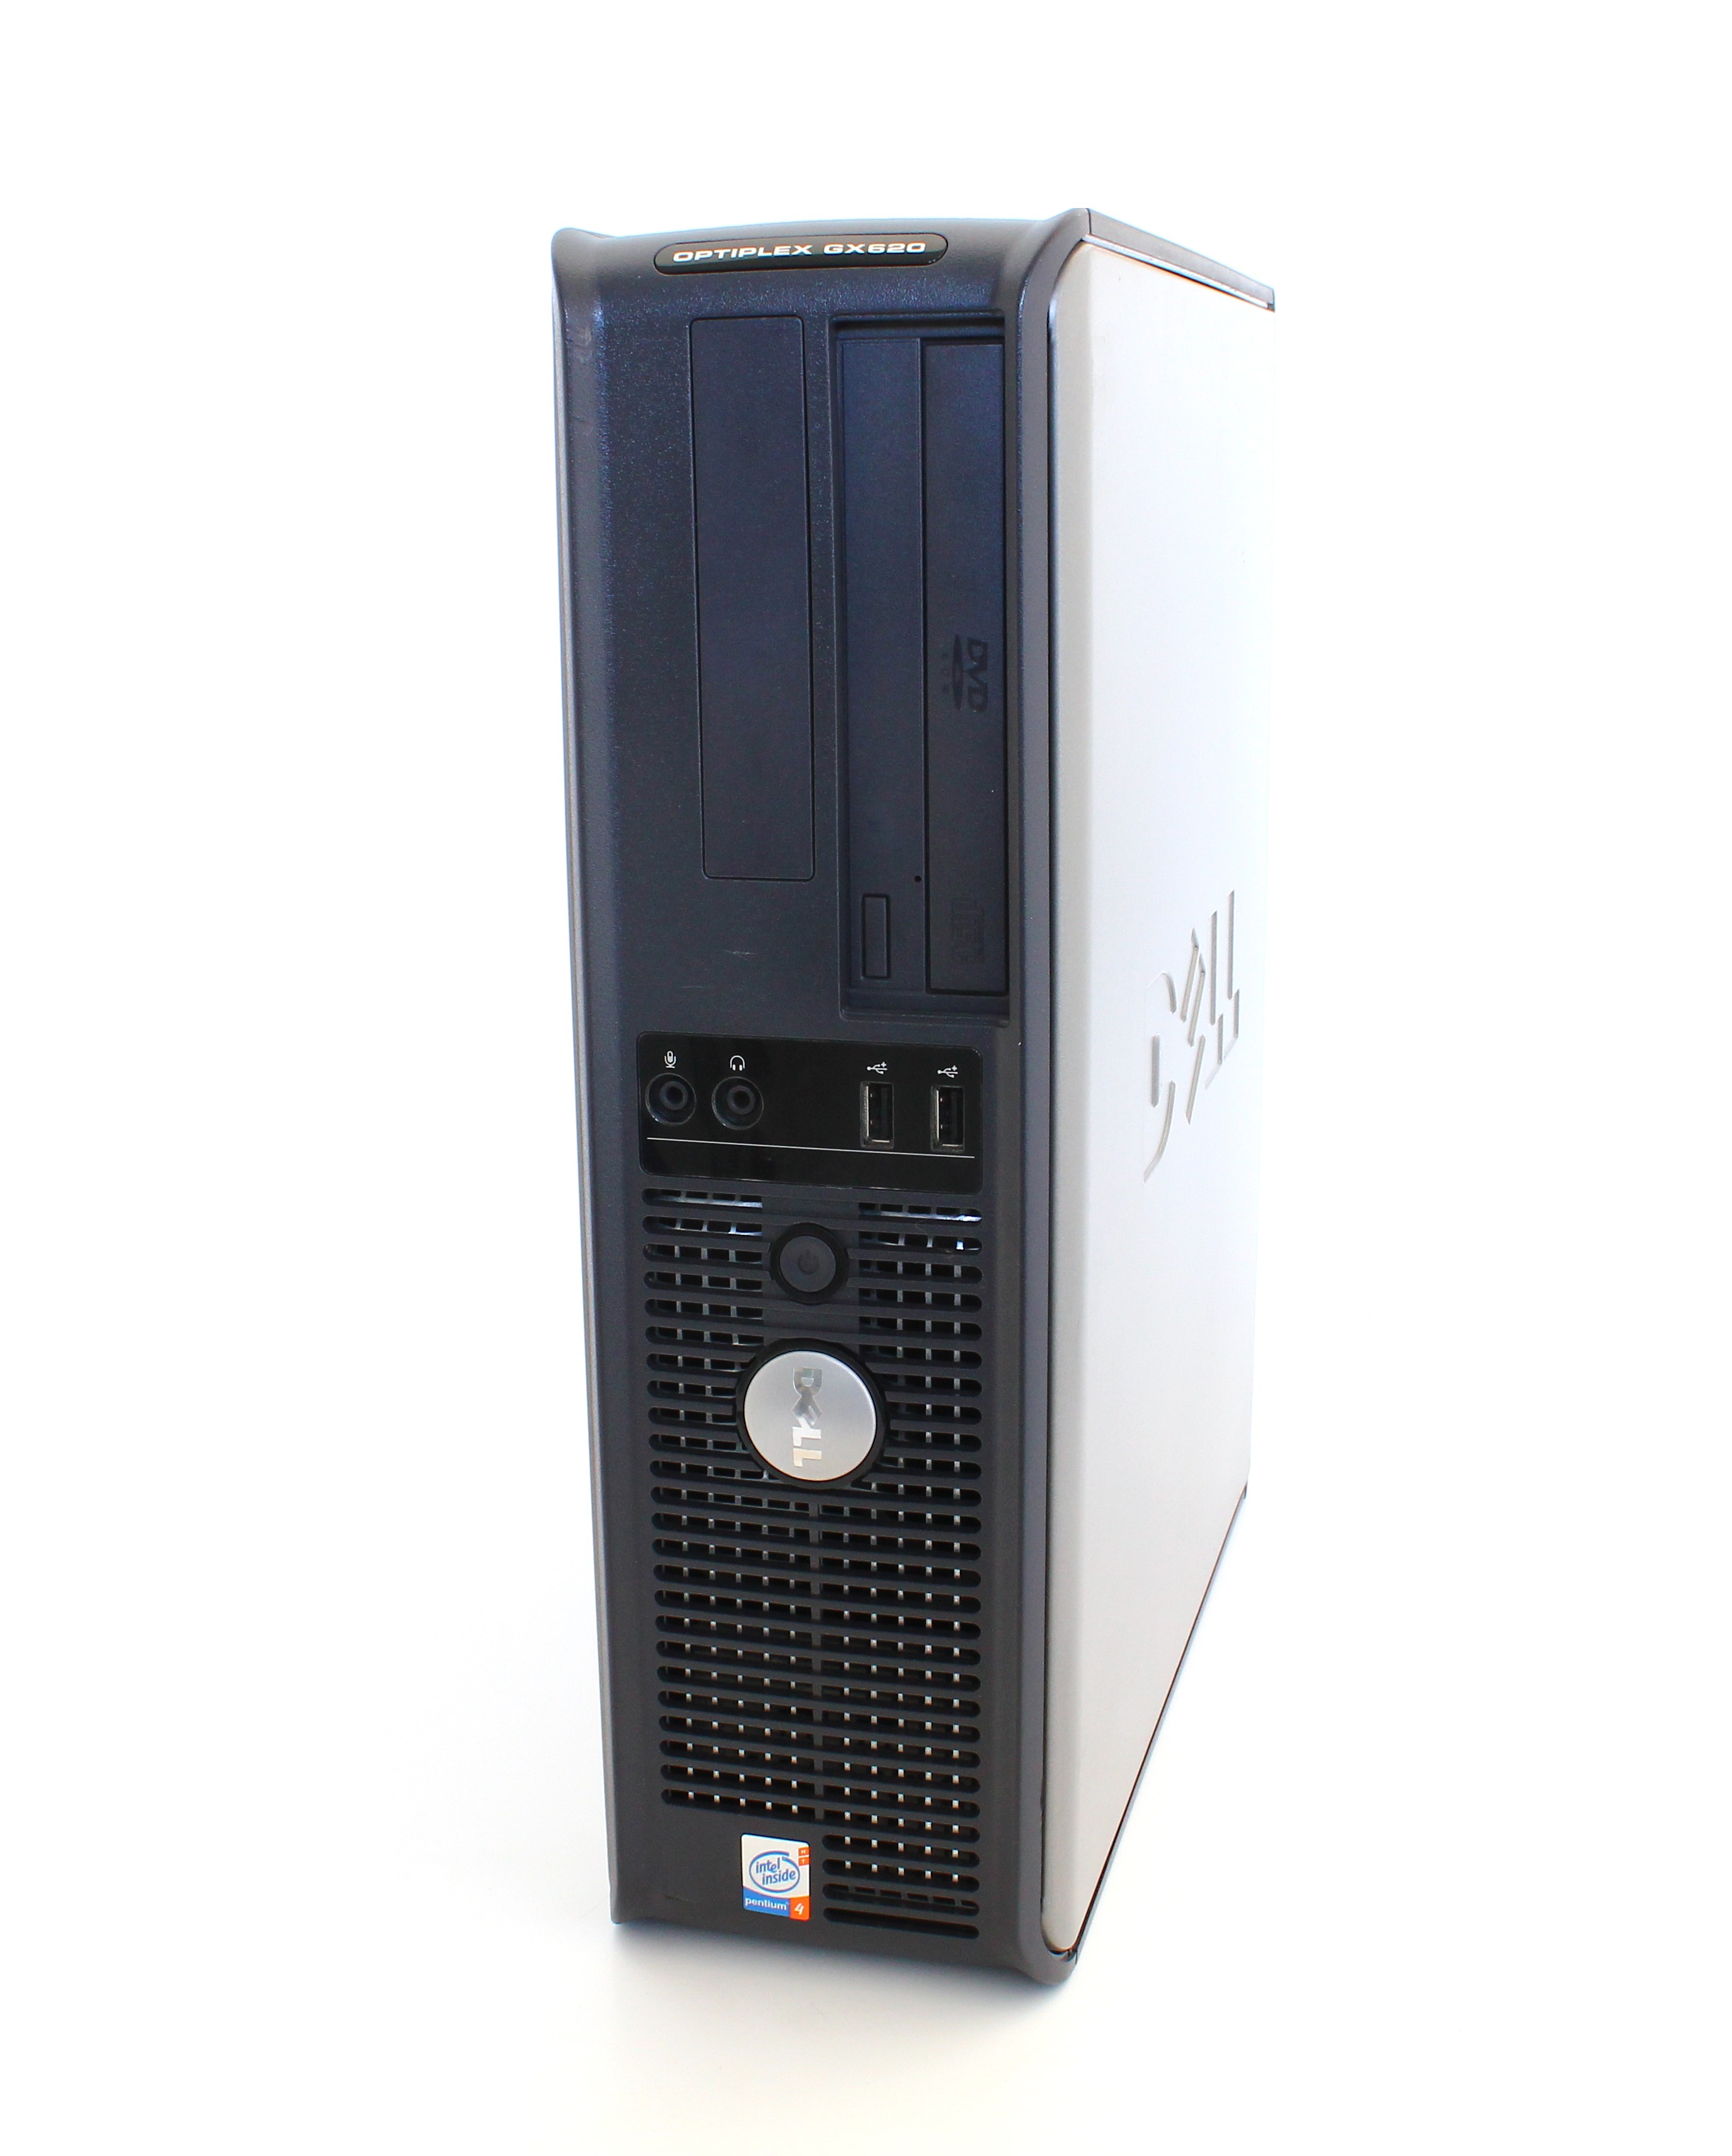 Dell Optiplex GX620 Small Form Factor Computer, 1000g,4g, DVD Windows 7 Professional x32